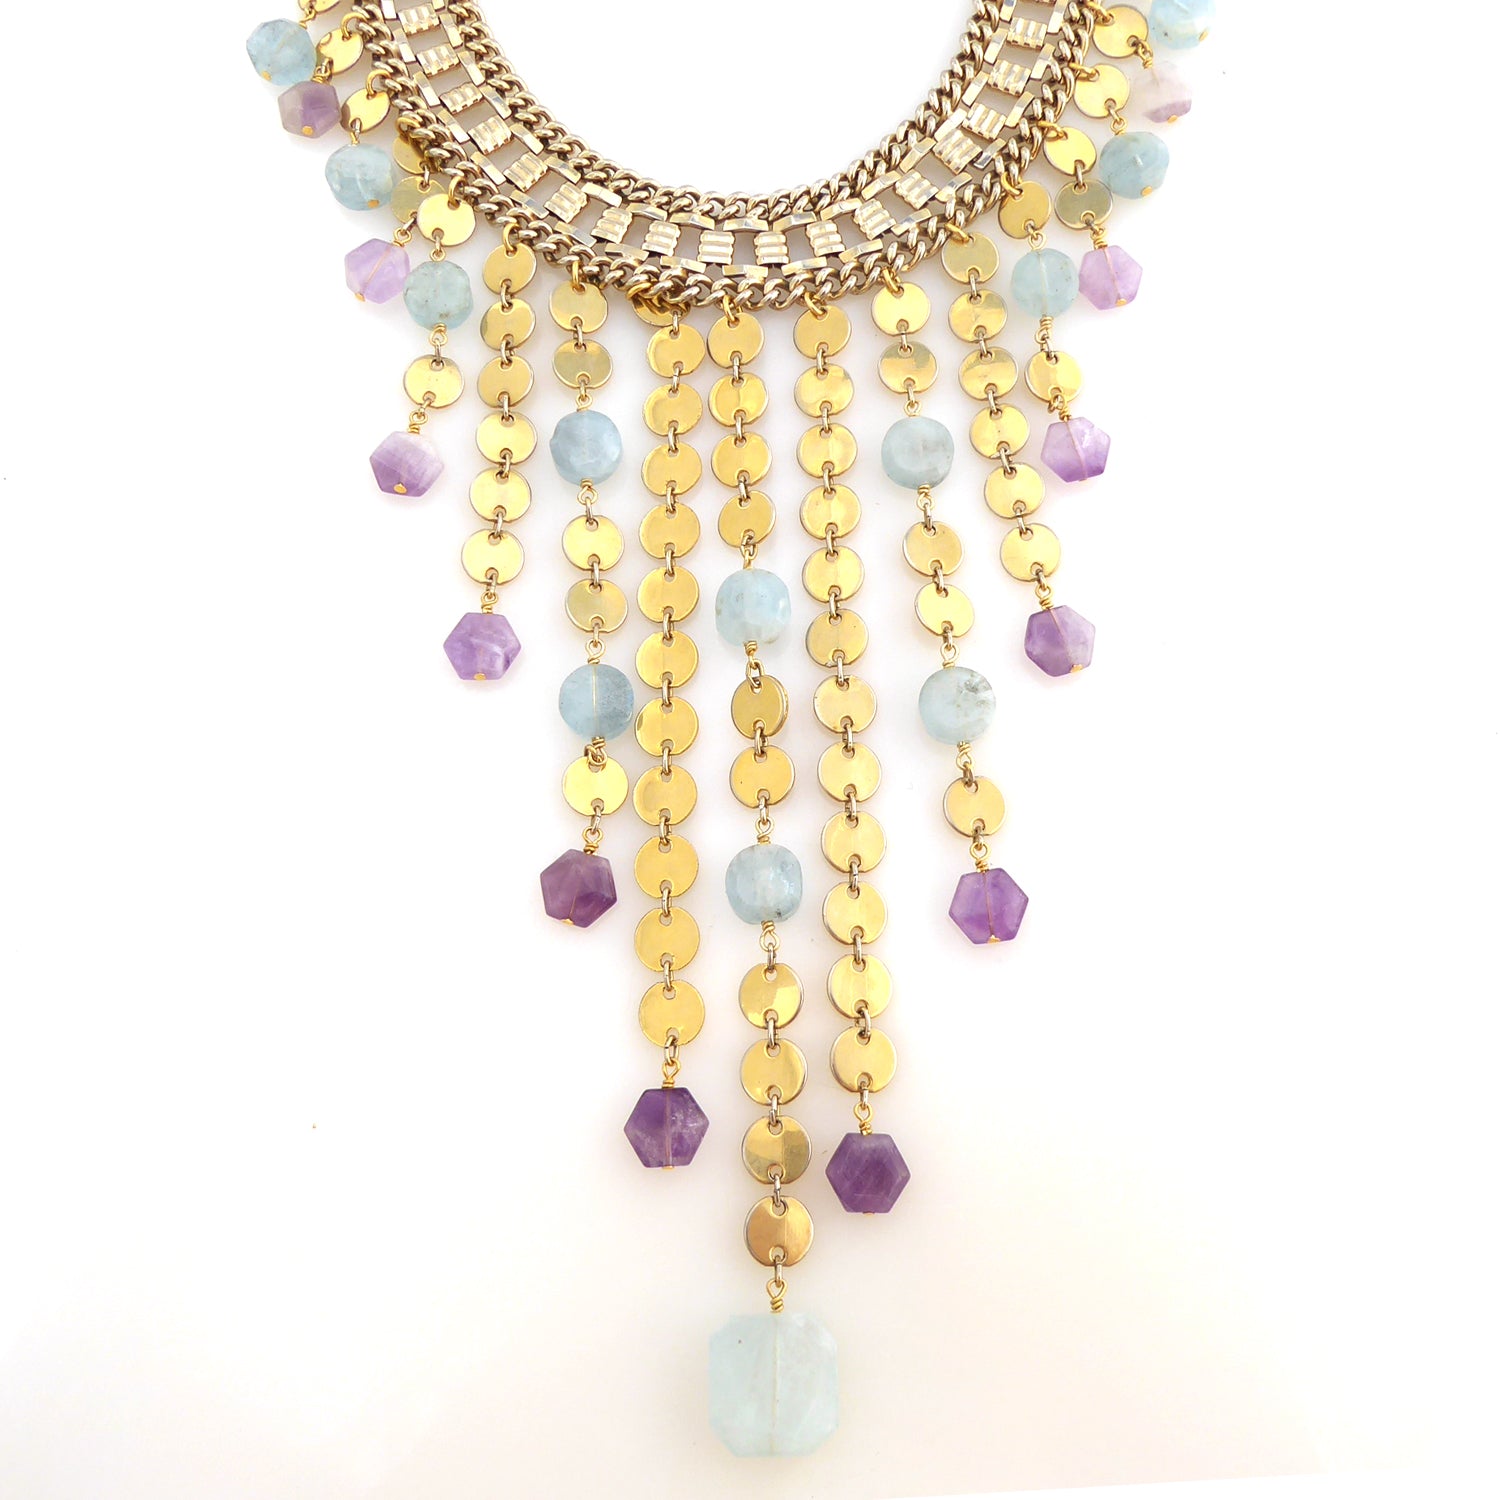 Carmeline aquamarine and amethyst necklace by Jenny Dayco 1